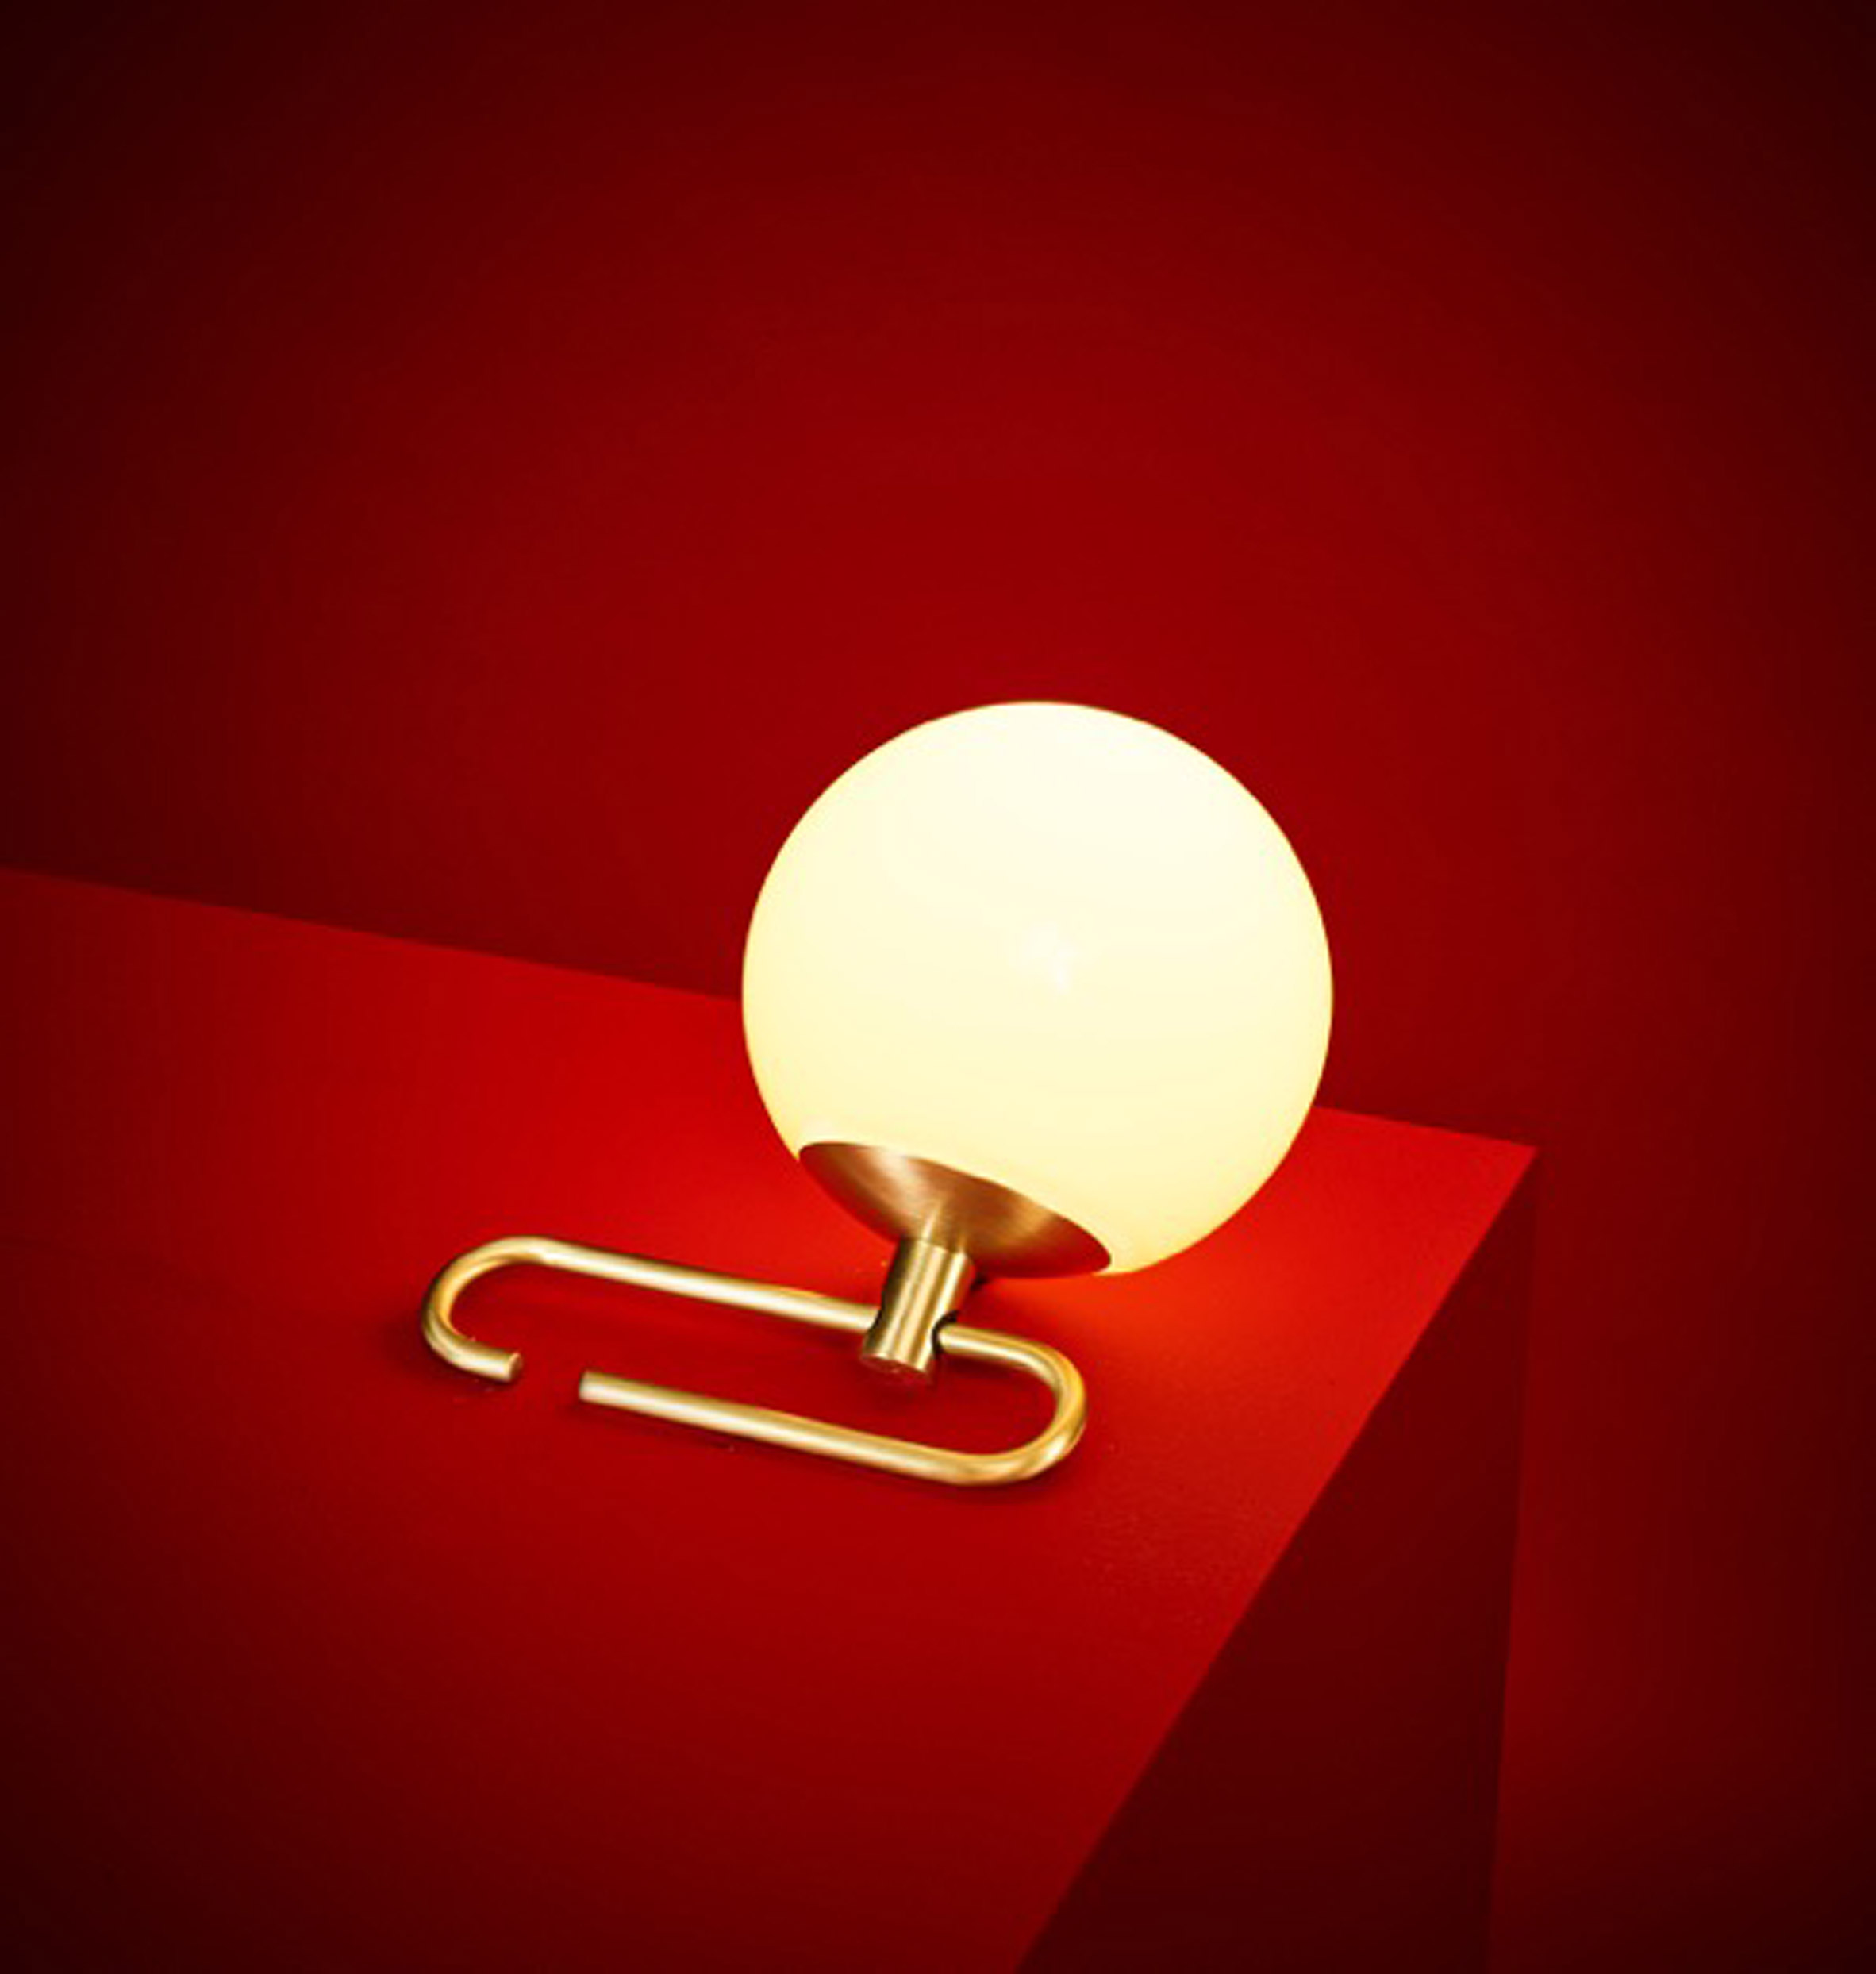 Neri&Hu designs lantern-inspired lamps that hang from adjustable brass rings